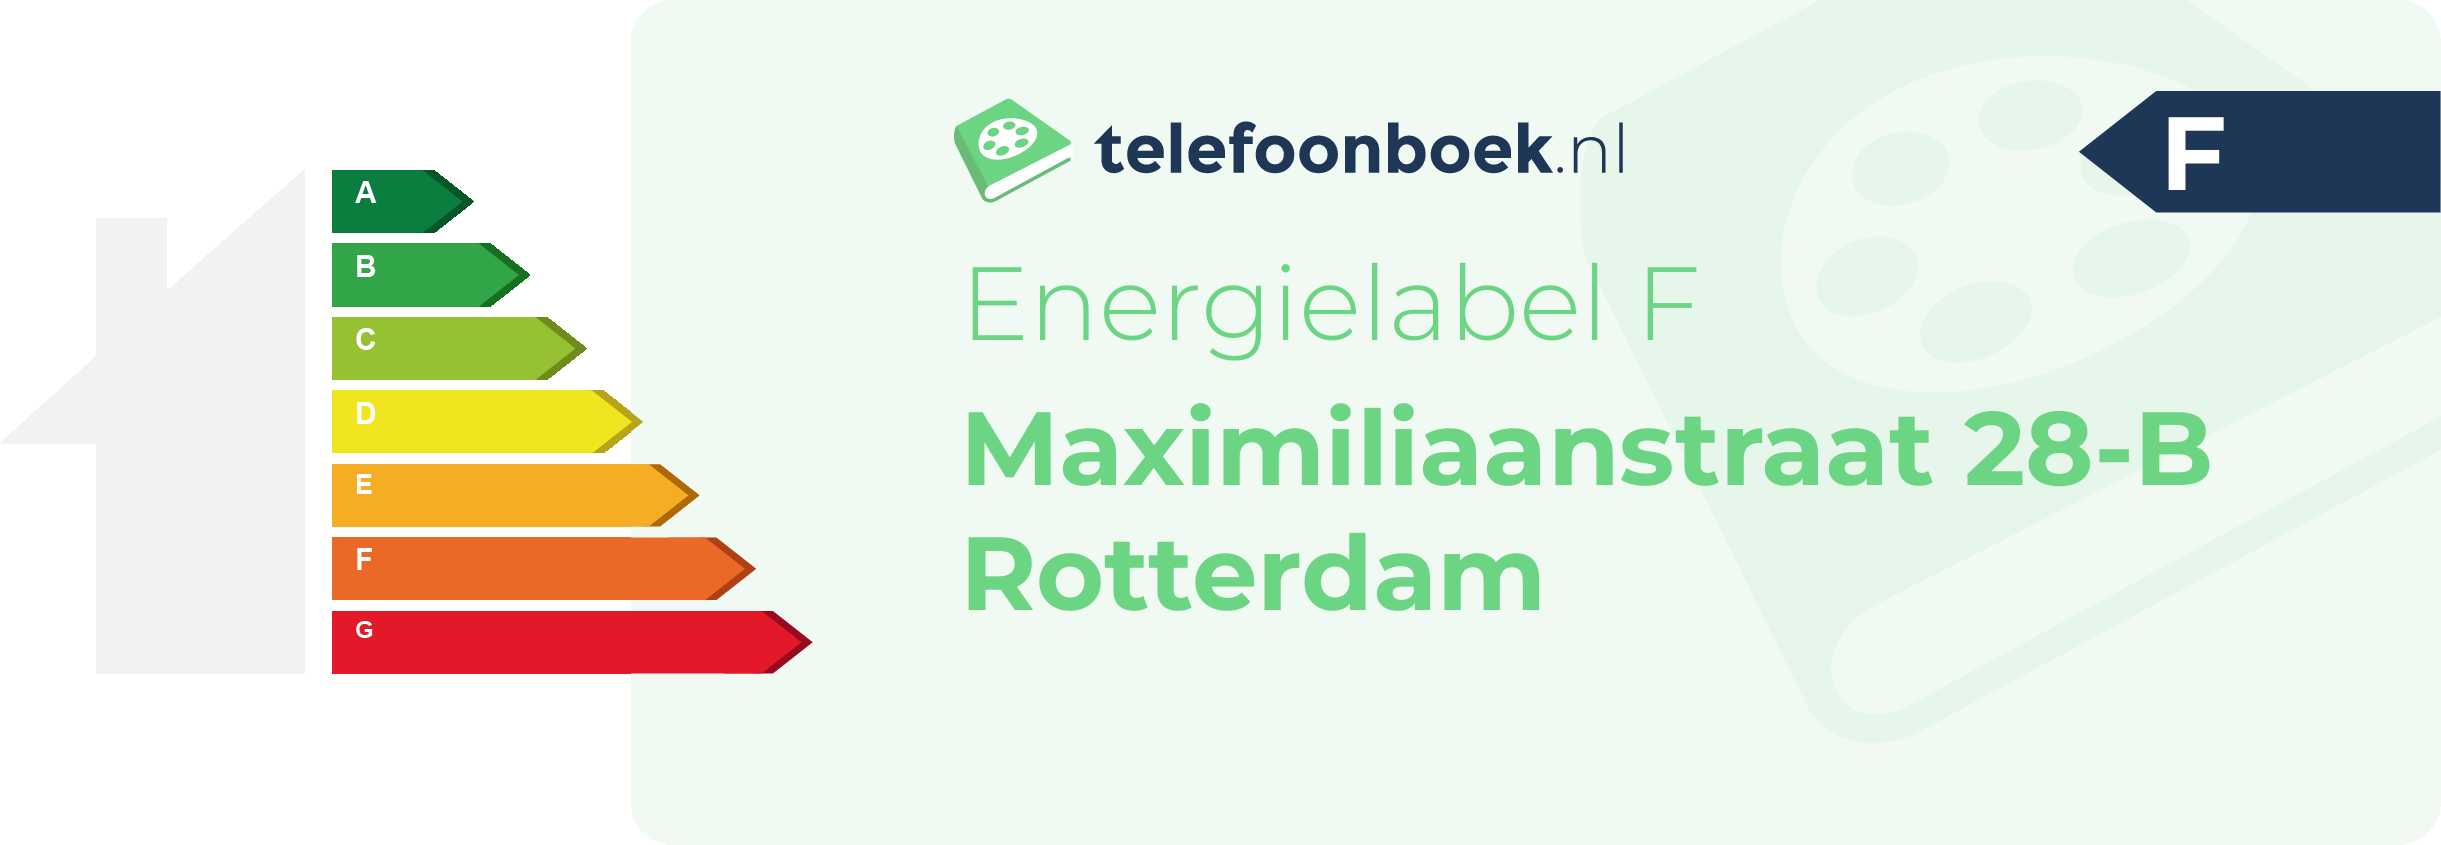 Energielabel Maximiliaanstraat 28-B Rotterdam